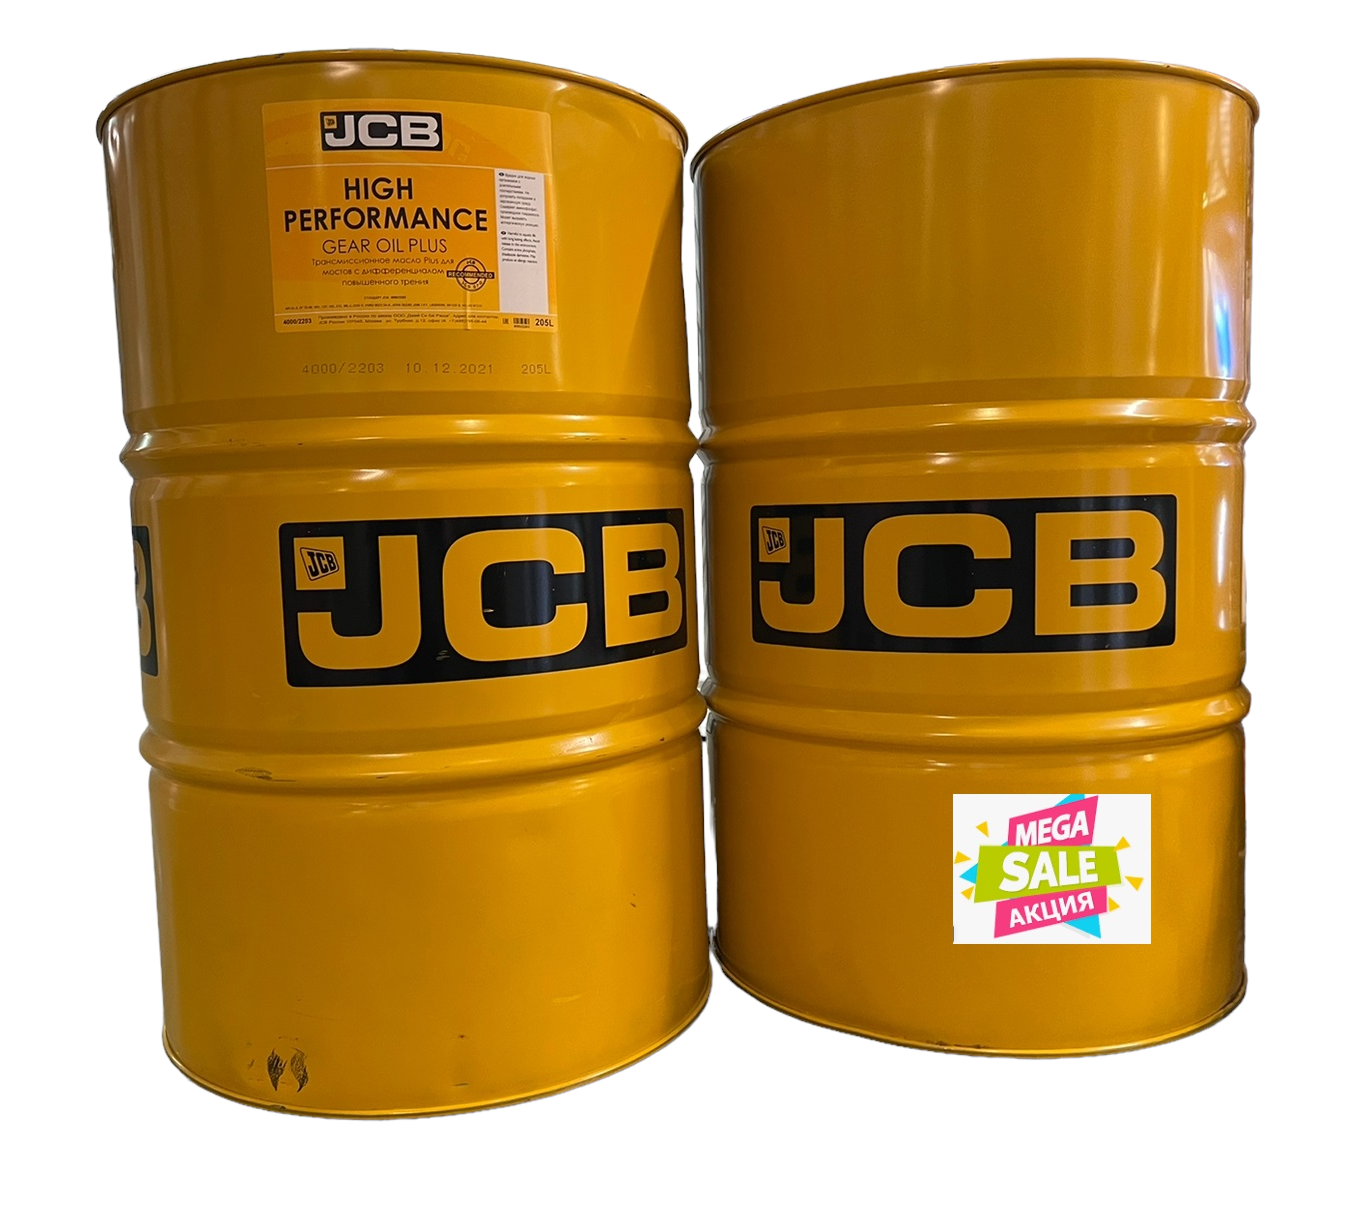 Jcb масло в мосты. JCB High Performance Gear Oil Plus. Масло JCB 436 15ц. Масло в бочках JCB. JCB High Performance Universal ATF.